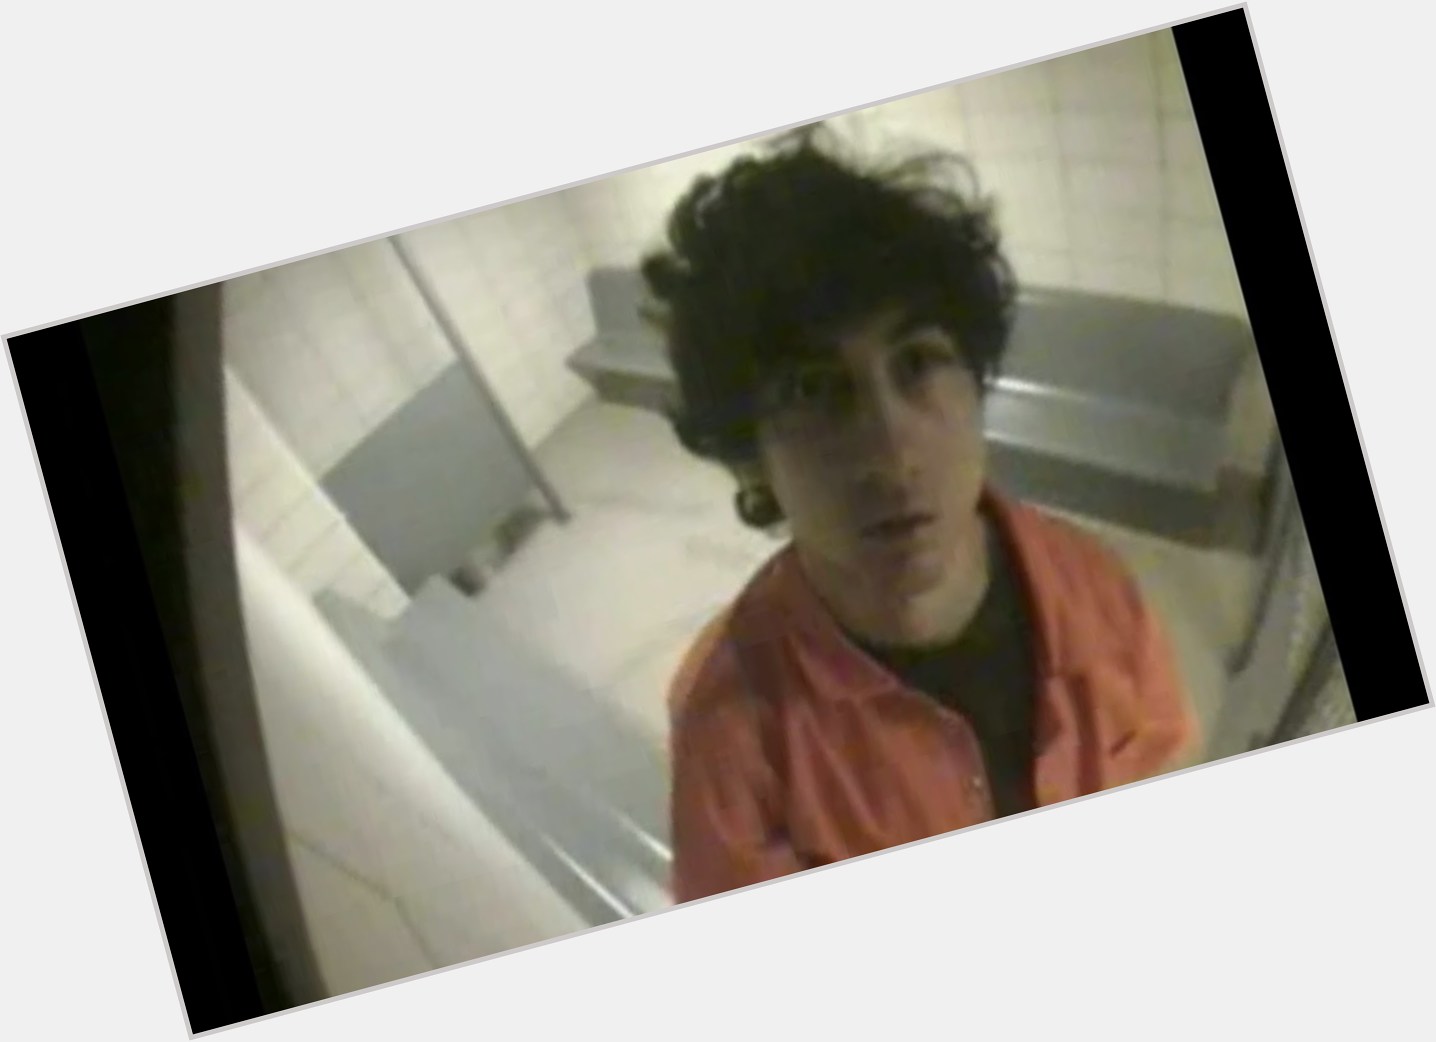 Dzhokhar Tsarnaev hairstyle 4.jpg